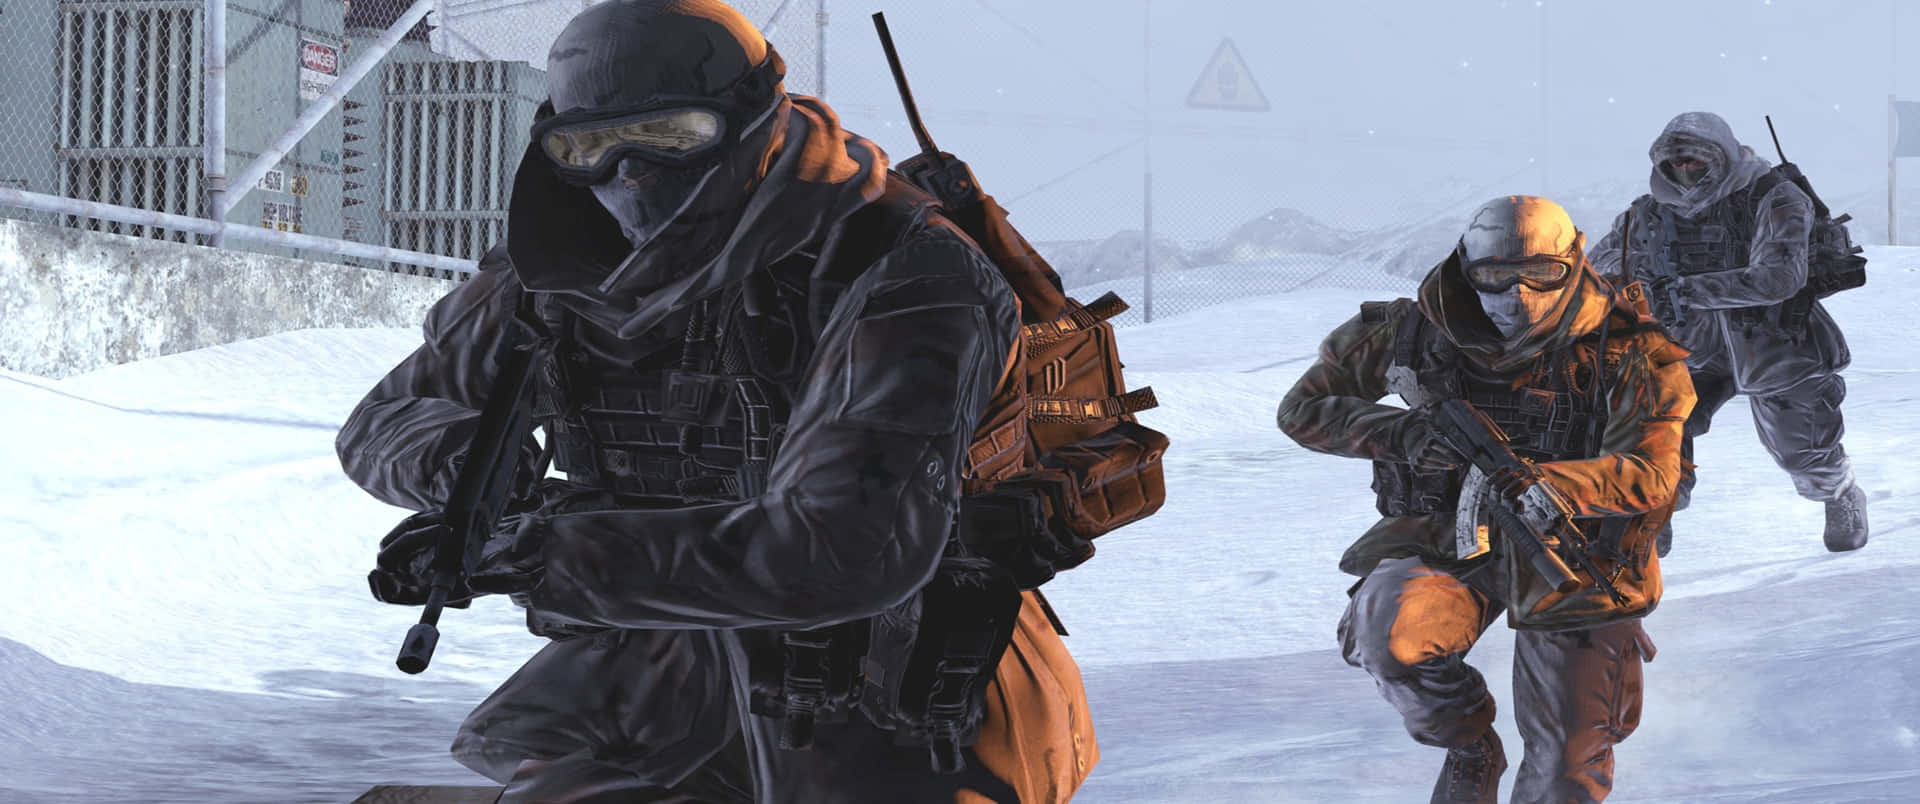 Snöigmiljö 3440x1440p Call Of Duty Modern Warfare Bakgrundsbild.